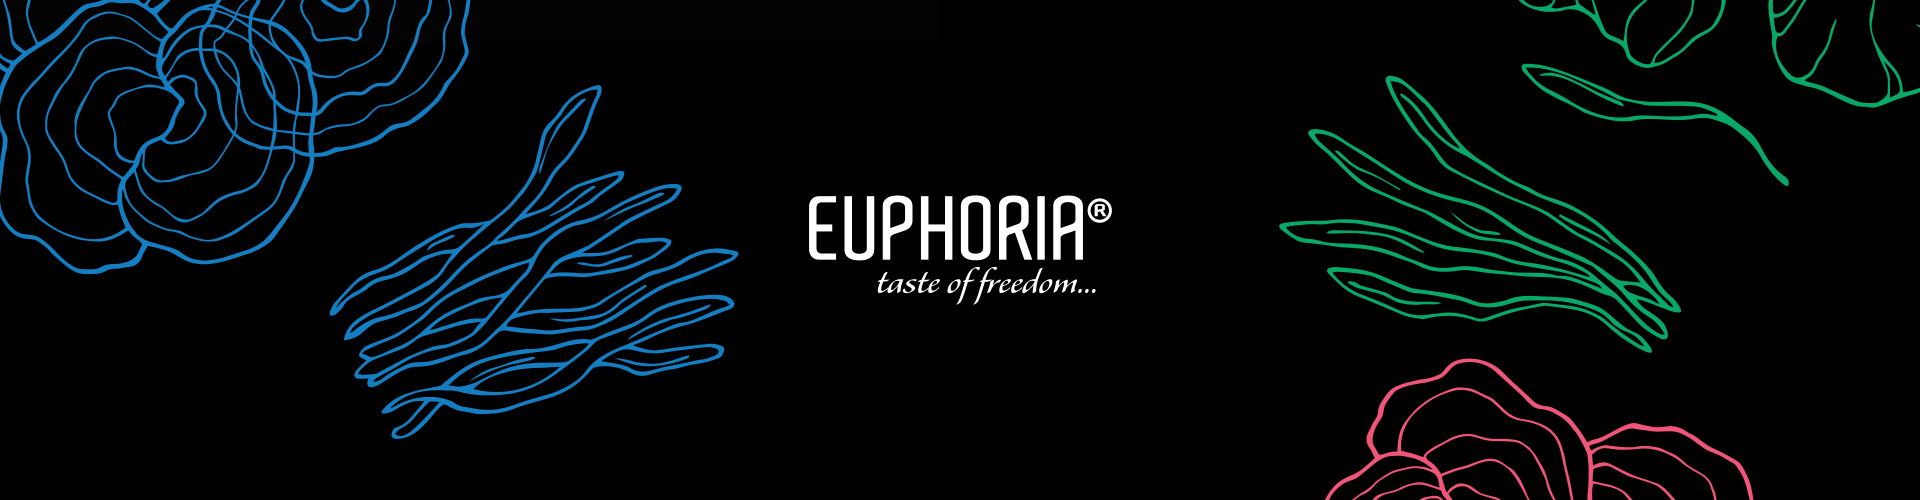 banner_euphoria